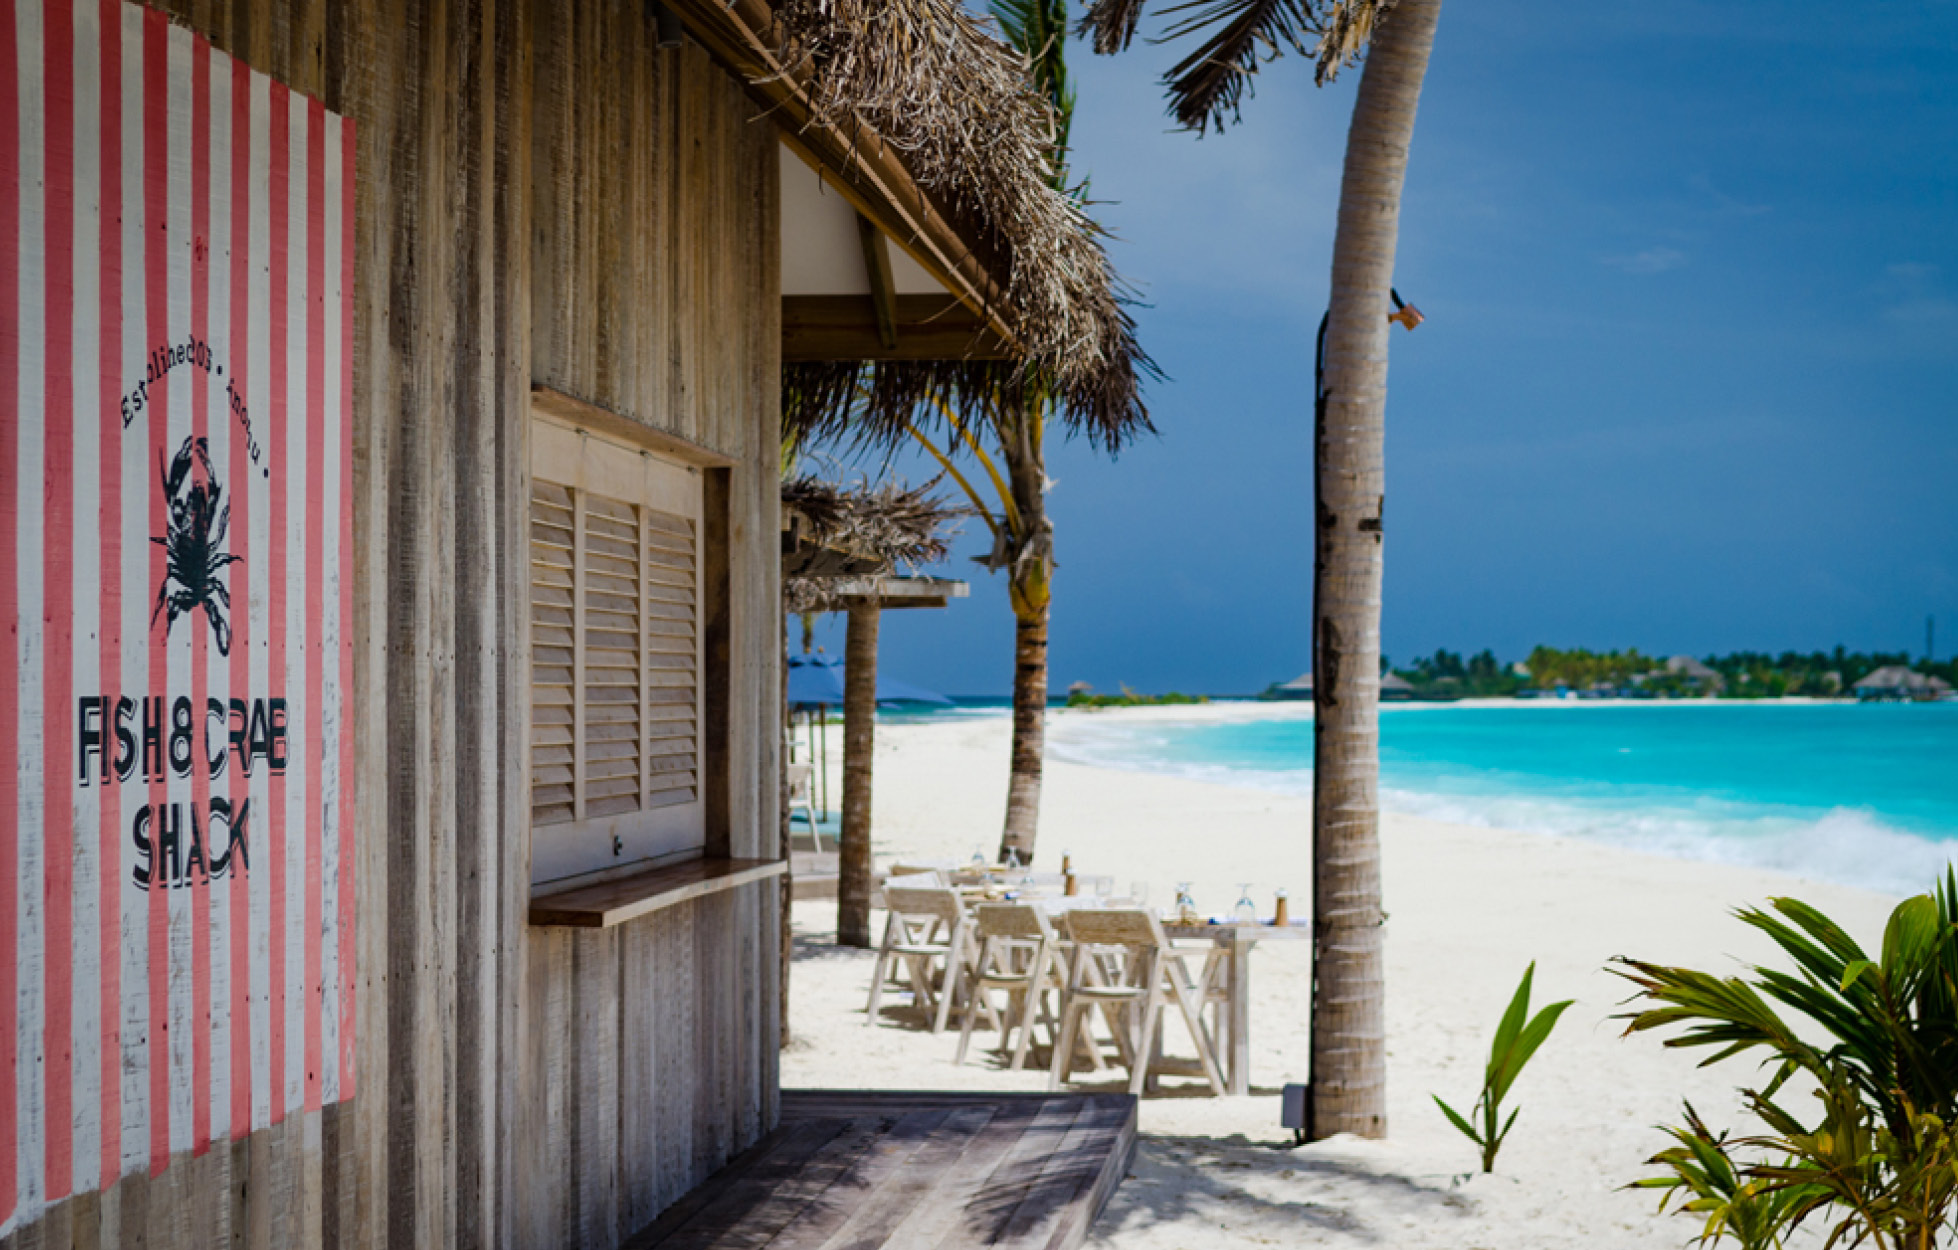 finolhu crabshack beach bar the maldives 